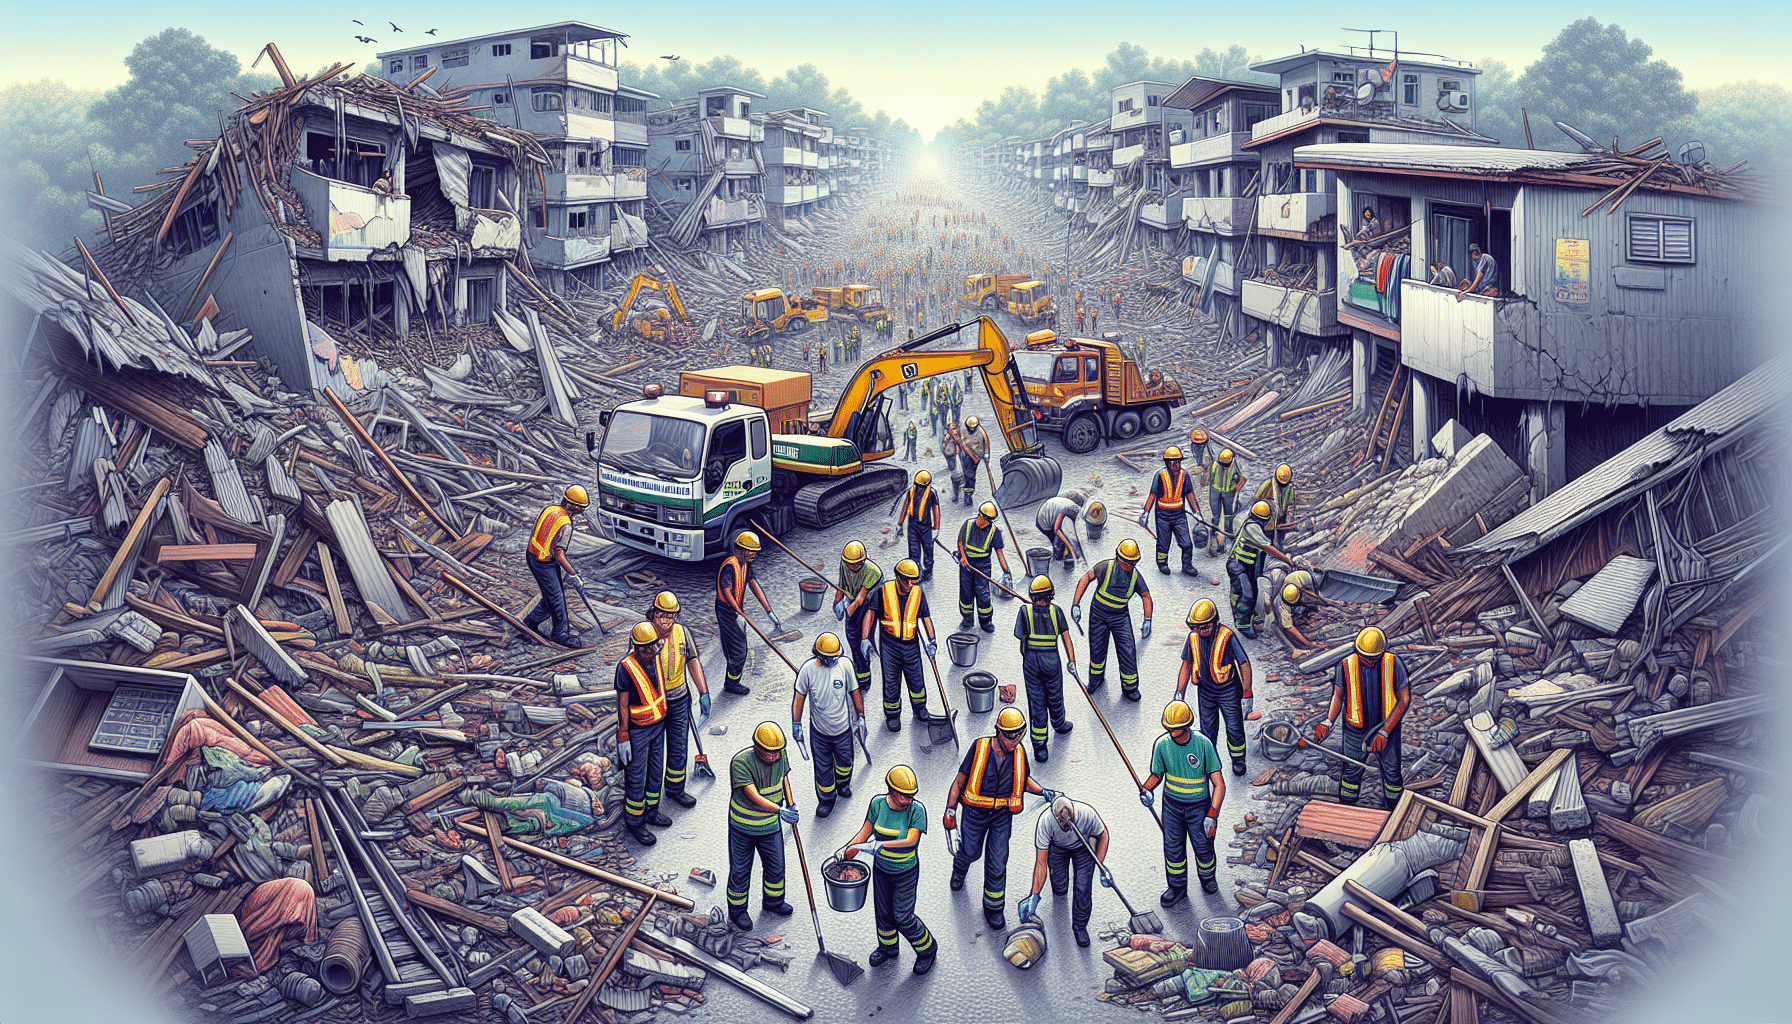 Illustration of FEMA's Role in Debris Removal